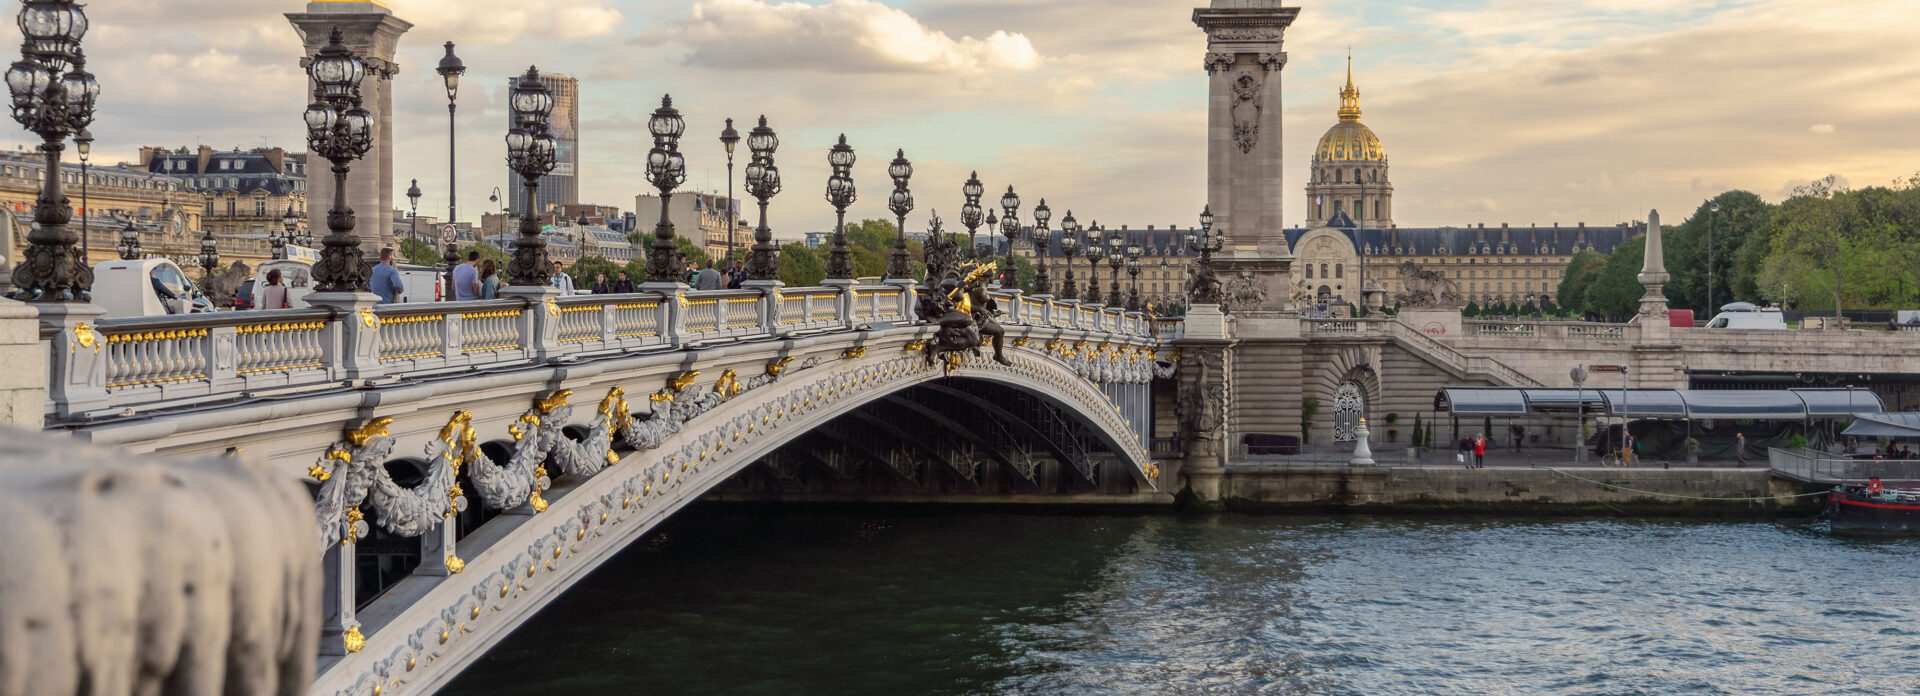 Pont Alexandre III Paris bro design arkitektur hvor ligger den